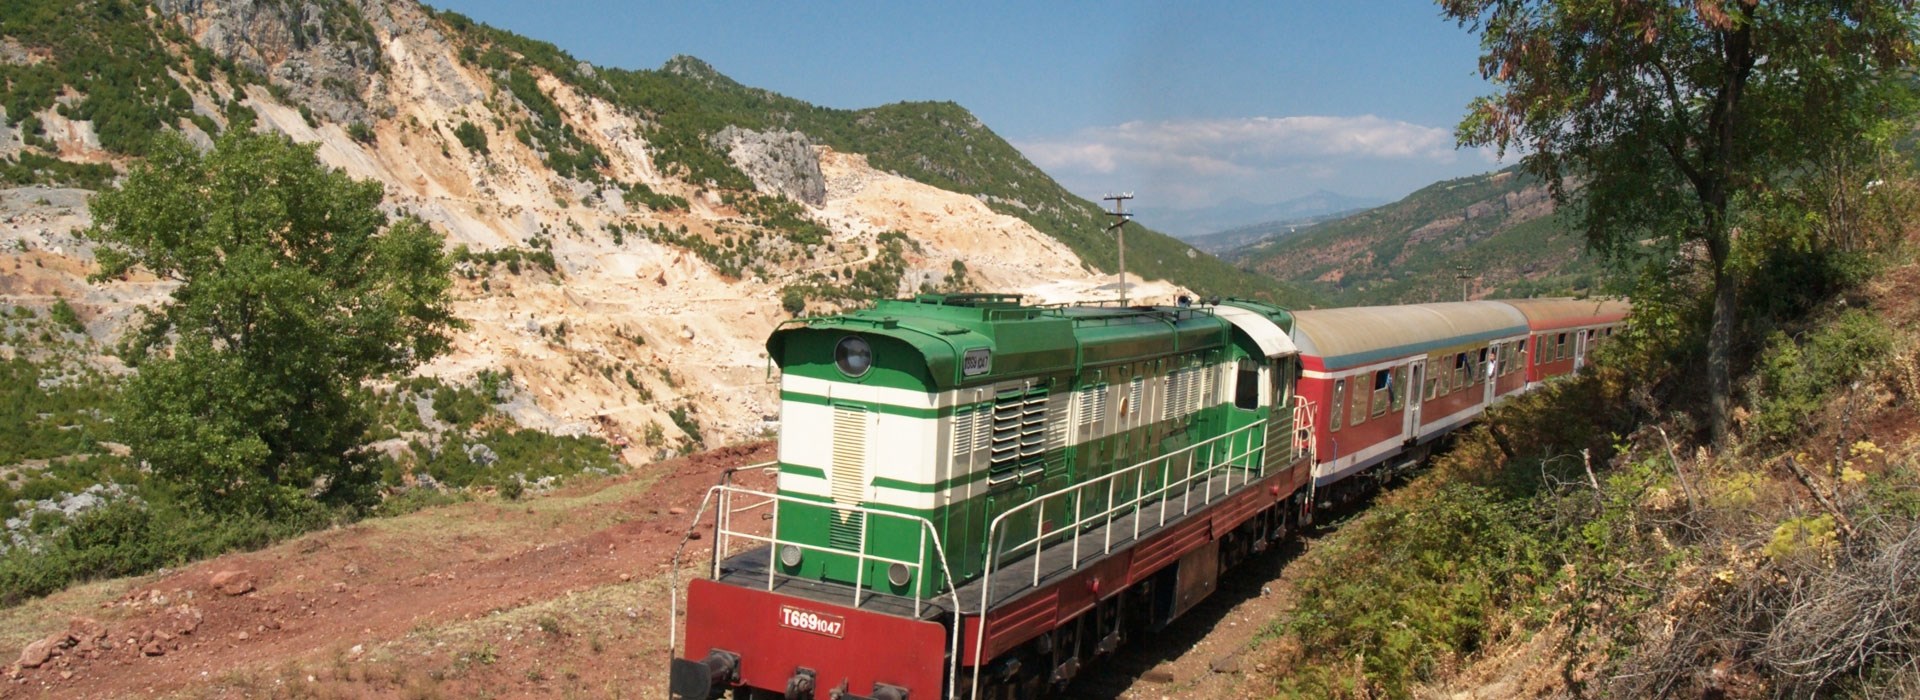 Visiter l'Albanie en train - Albanie